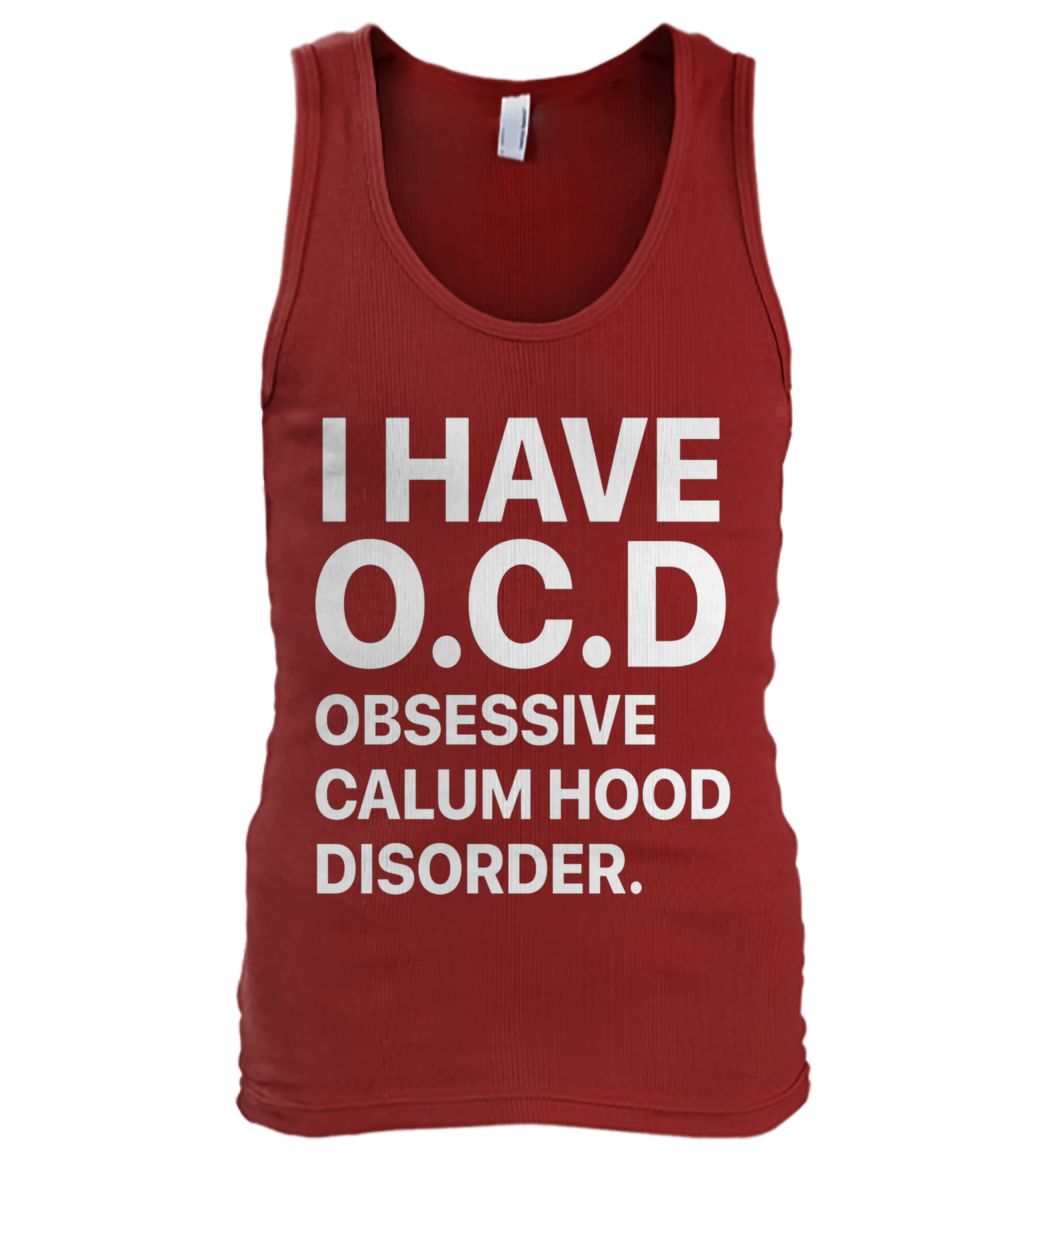 I have ocd obsessive calum hood disorder men's tank top